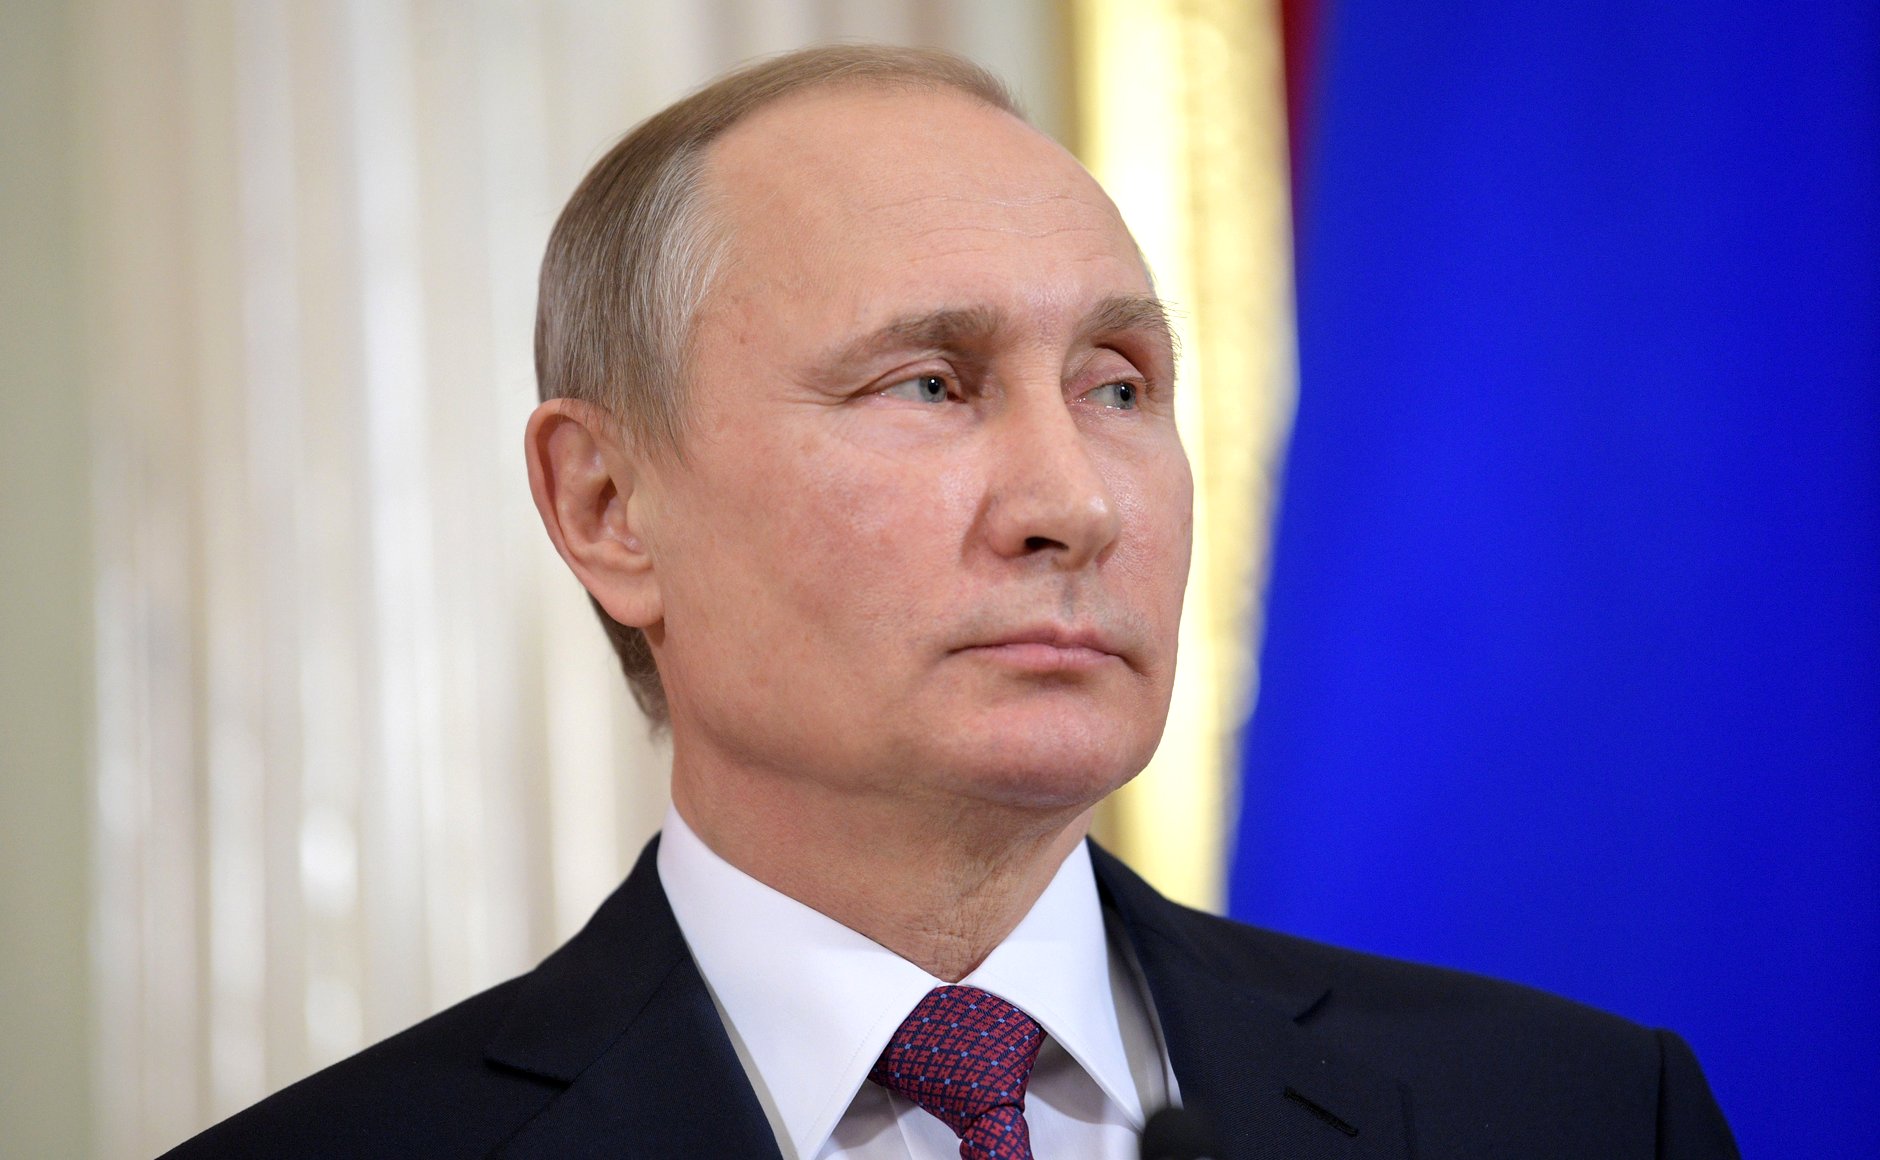 Twitter suspends account for impersonating Russian prez Putin